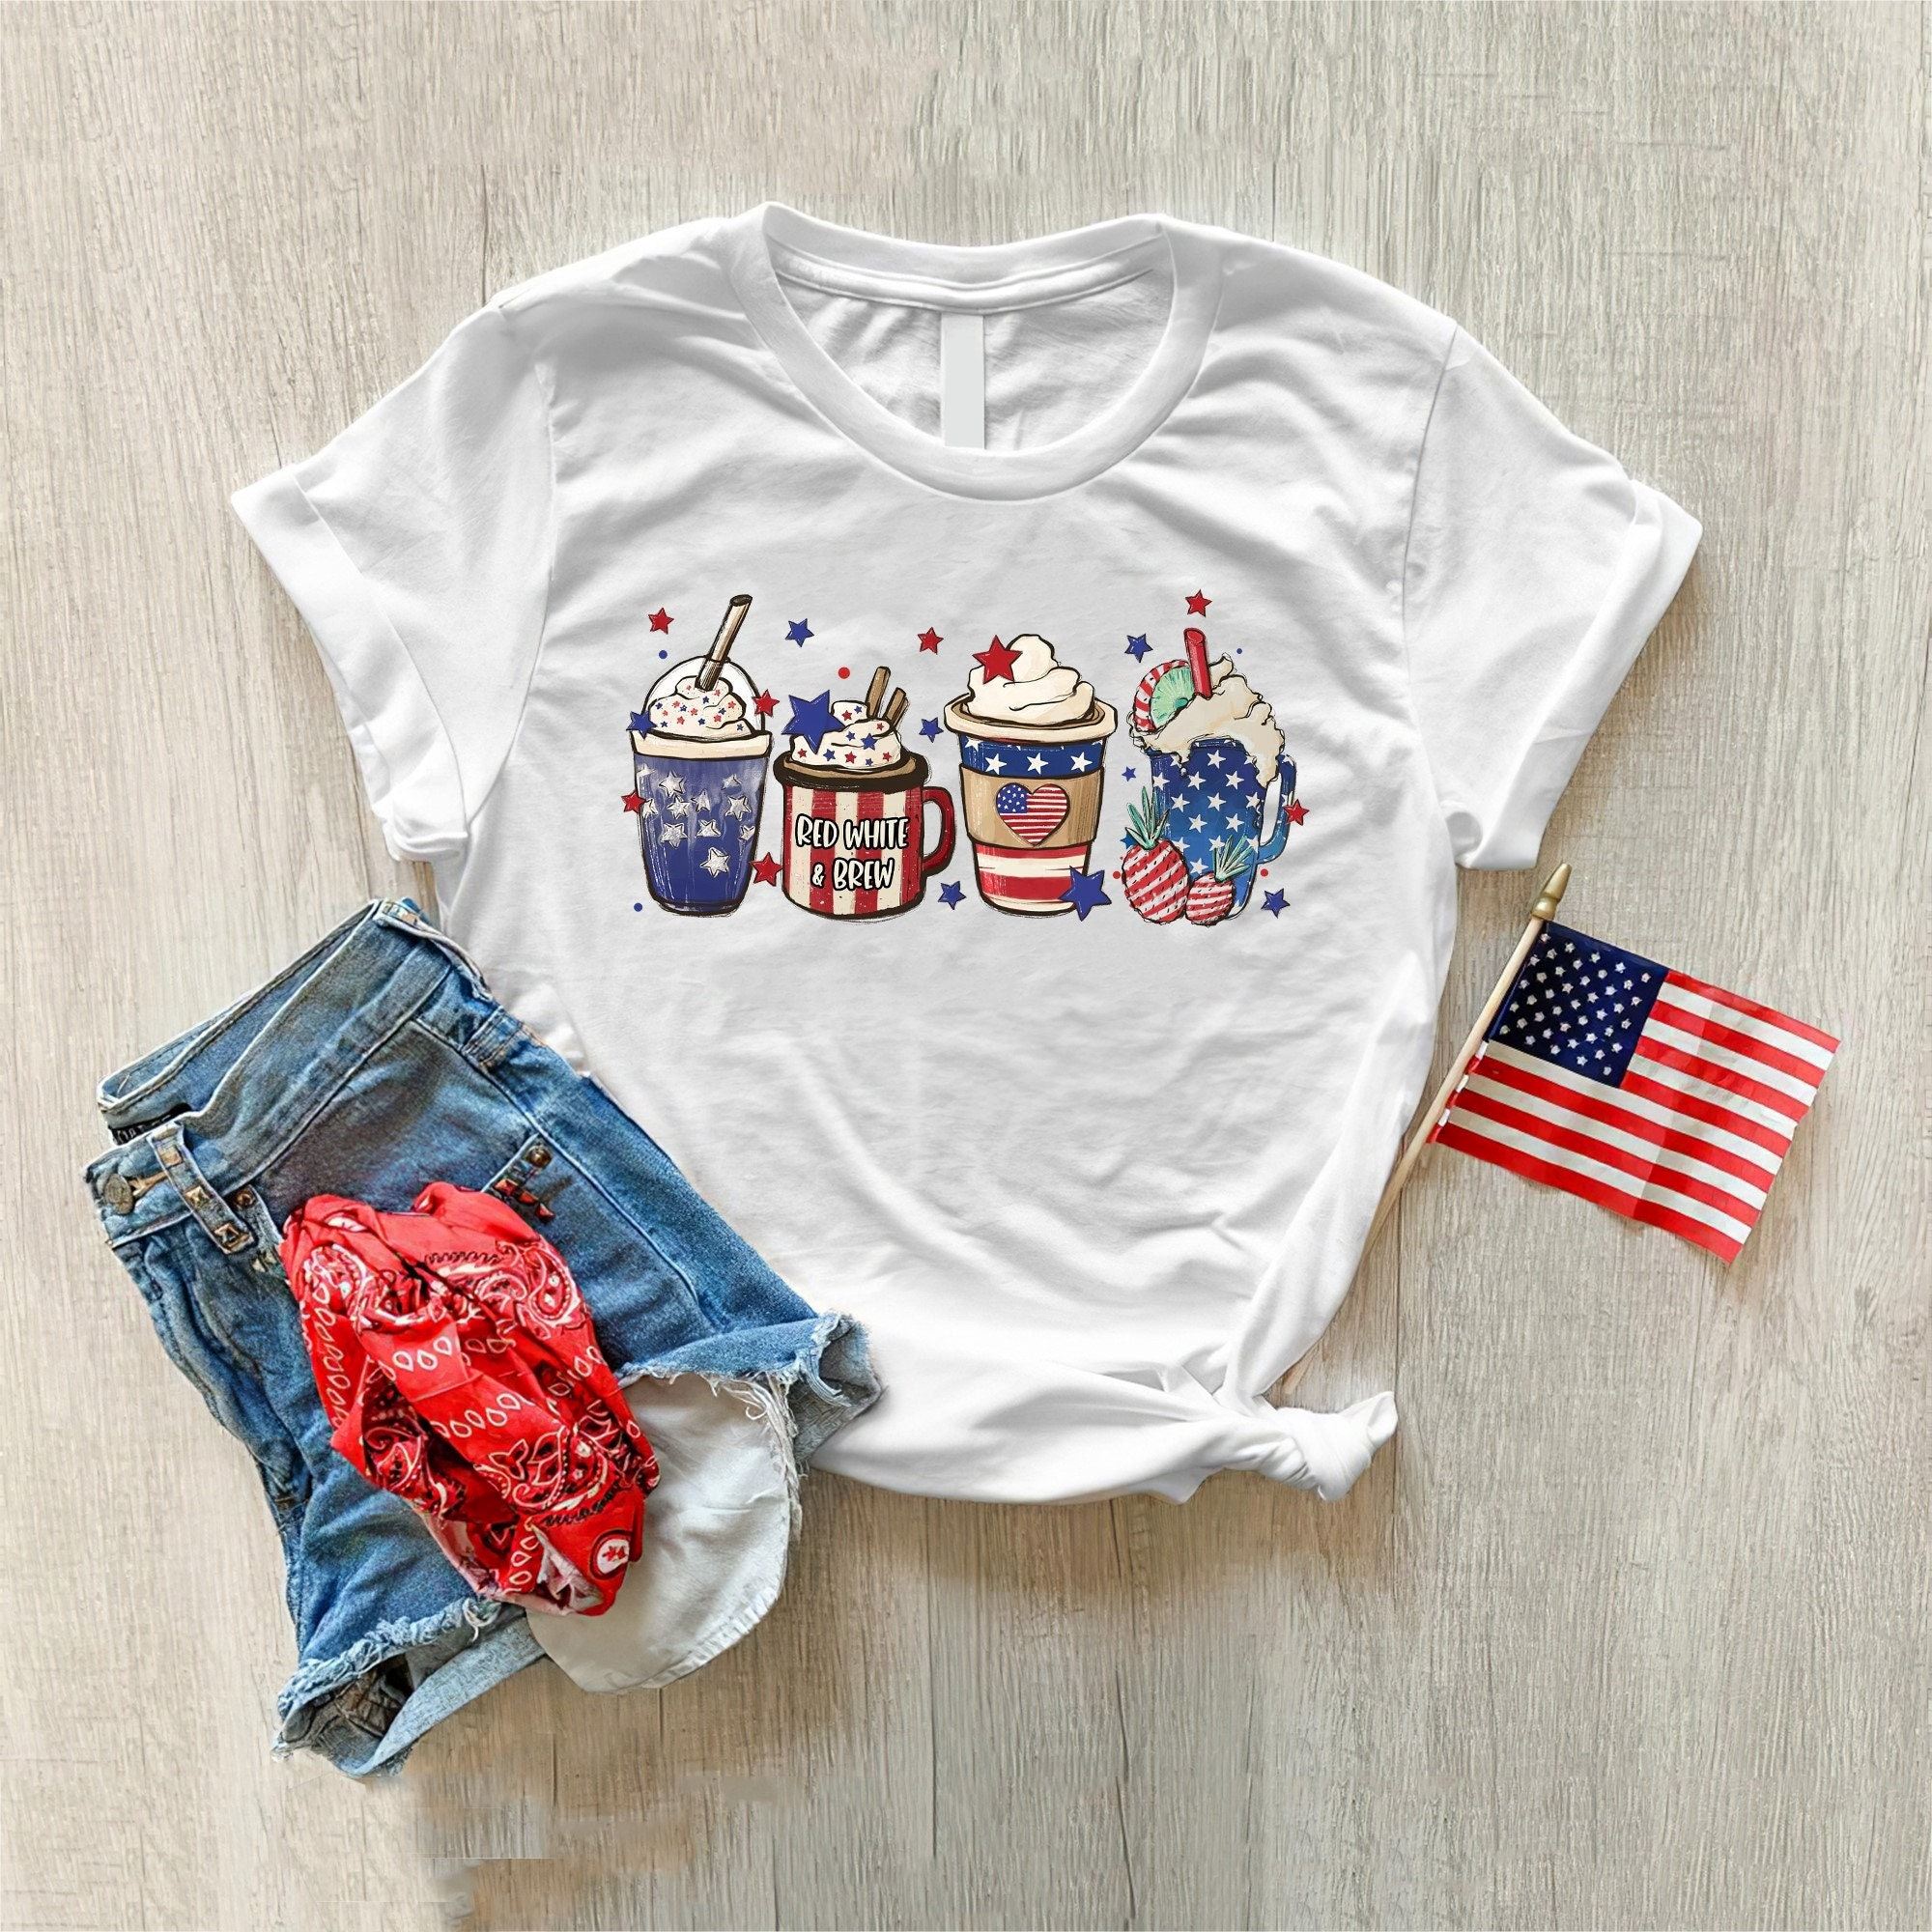 Awesome Coffe Cup American Shirt Coffee Latte Shirt Cute Shirt 4th Of July Shirt American Family Shirt Patriotic Shirt 